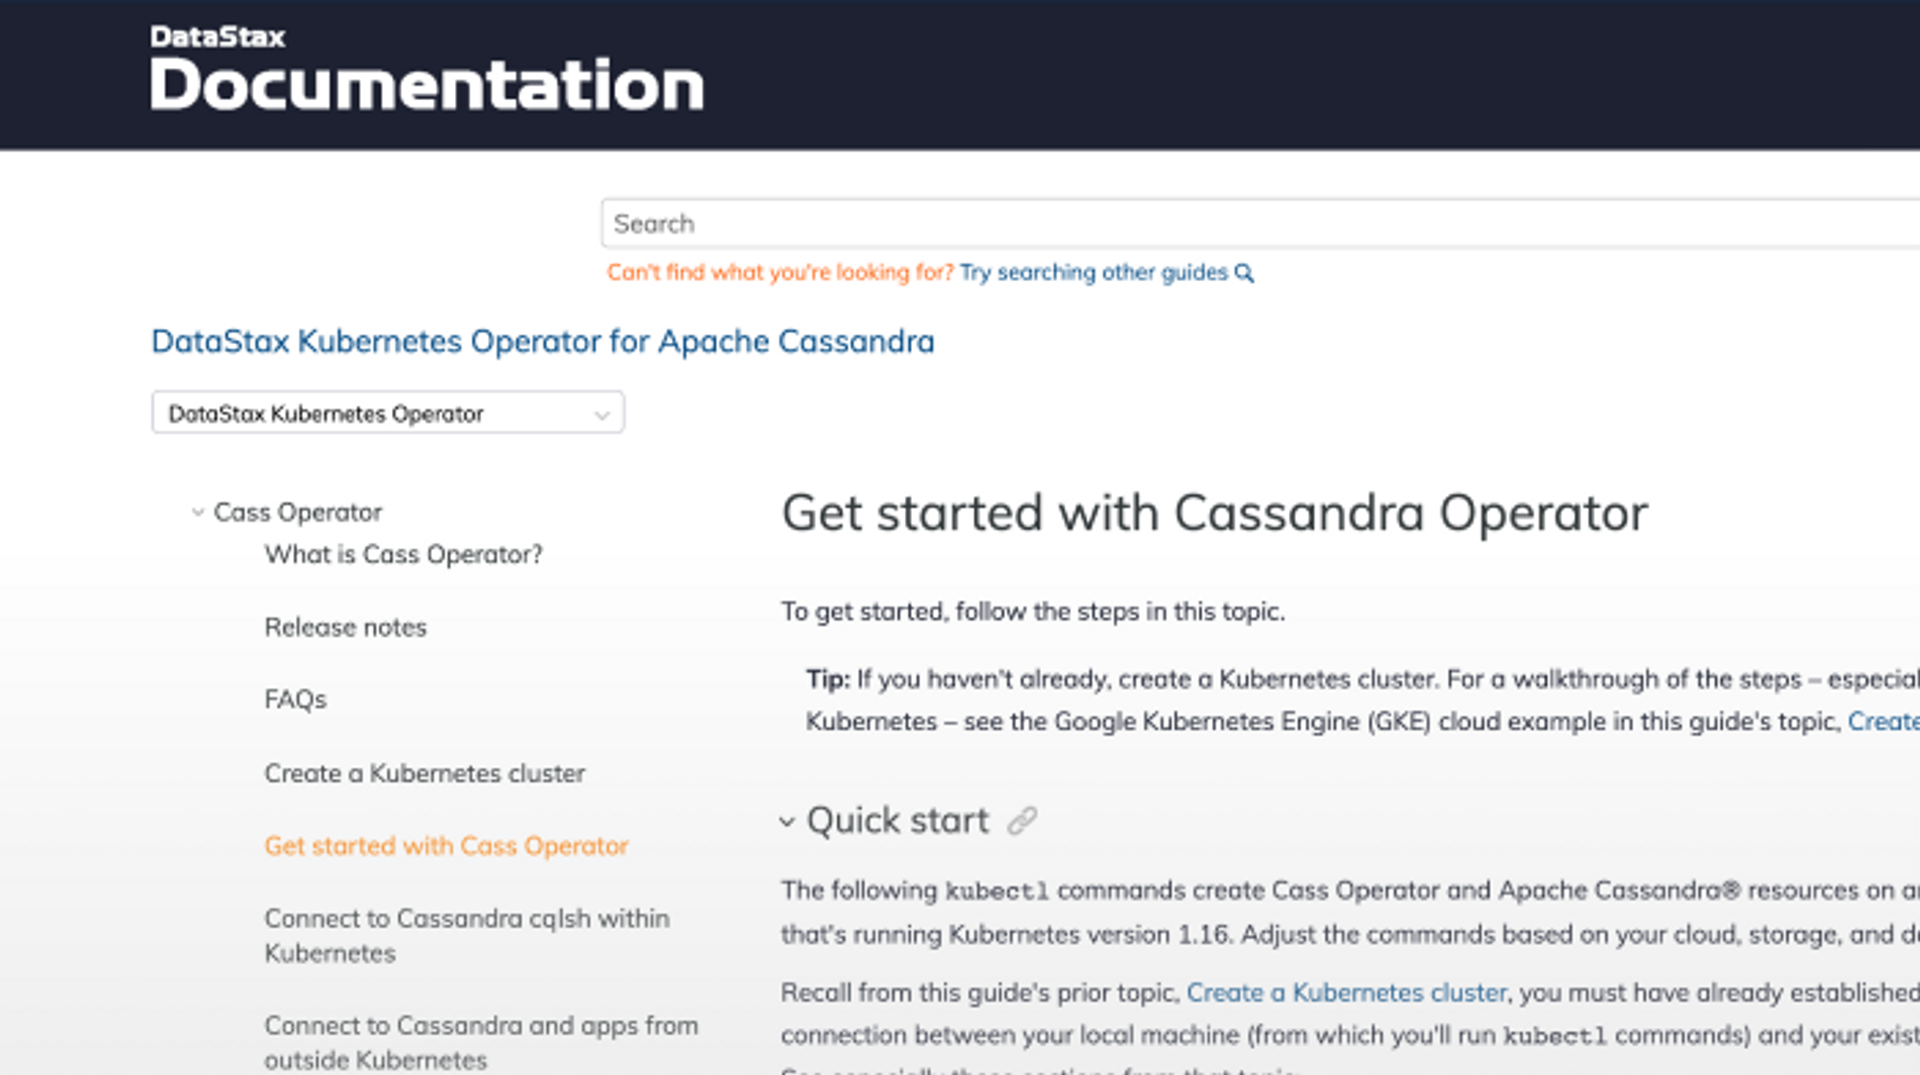 Docs: Get Started with Cassandra Operator